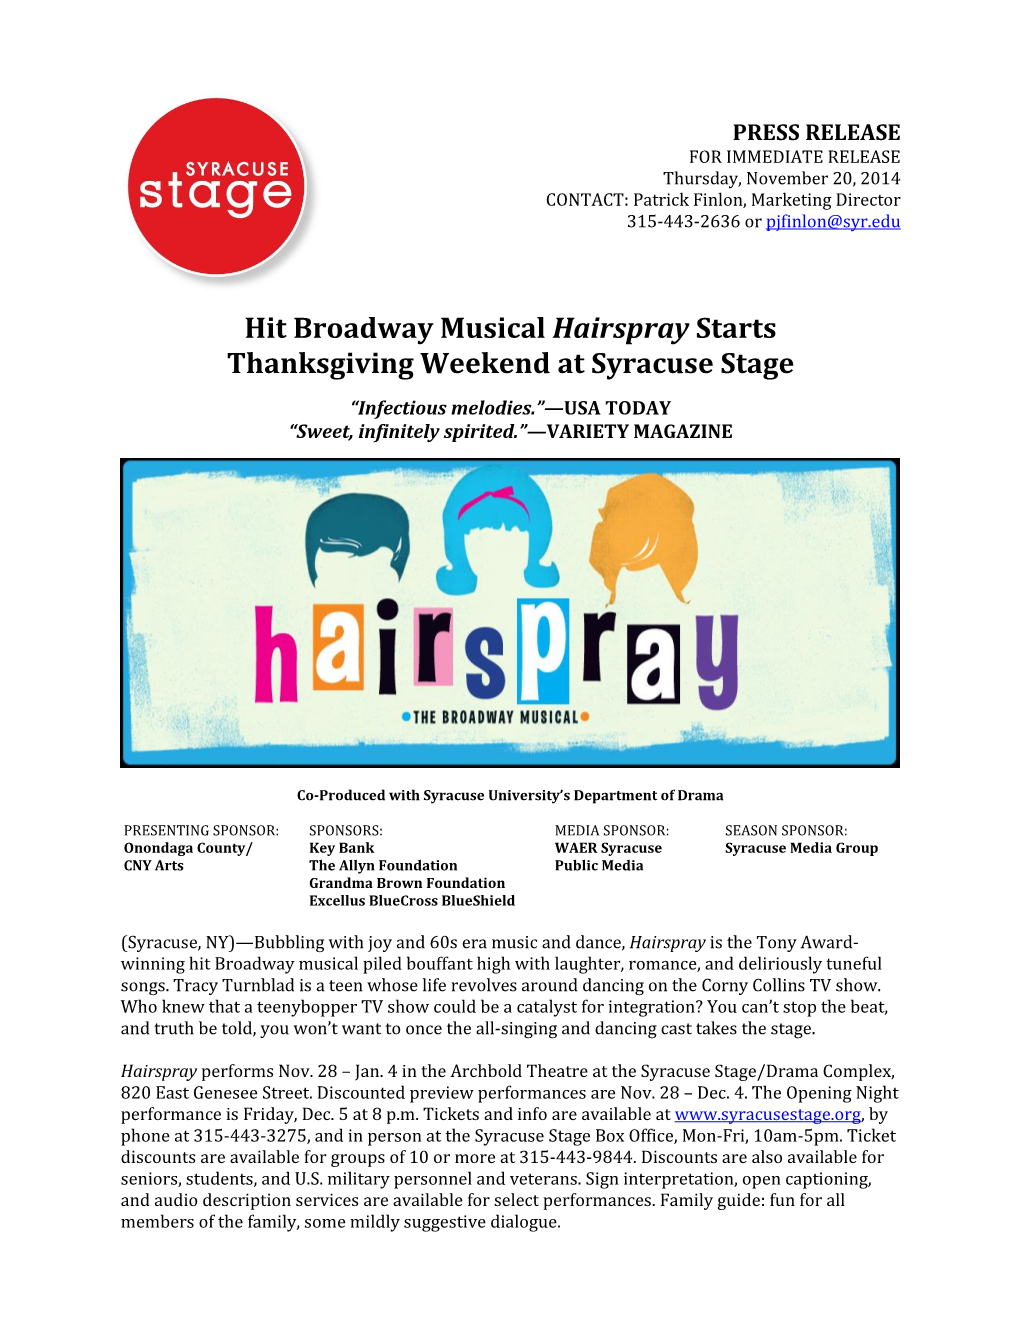 Hit Broadway Musical Hairspray Starts Thanksgiving Weekend at Syracuse Stage